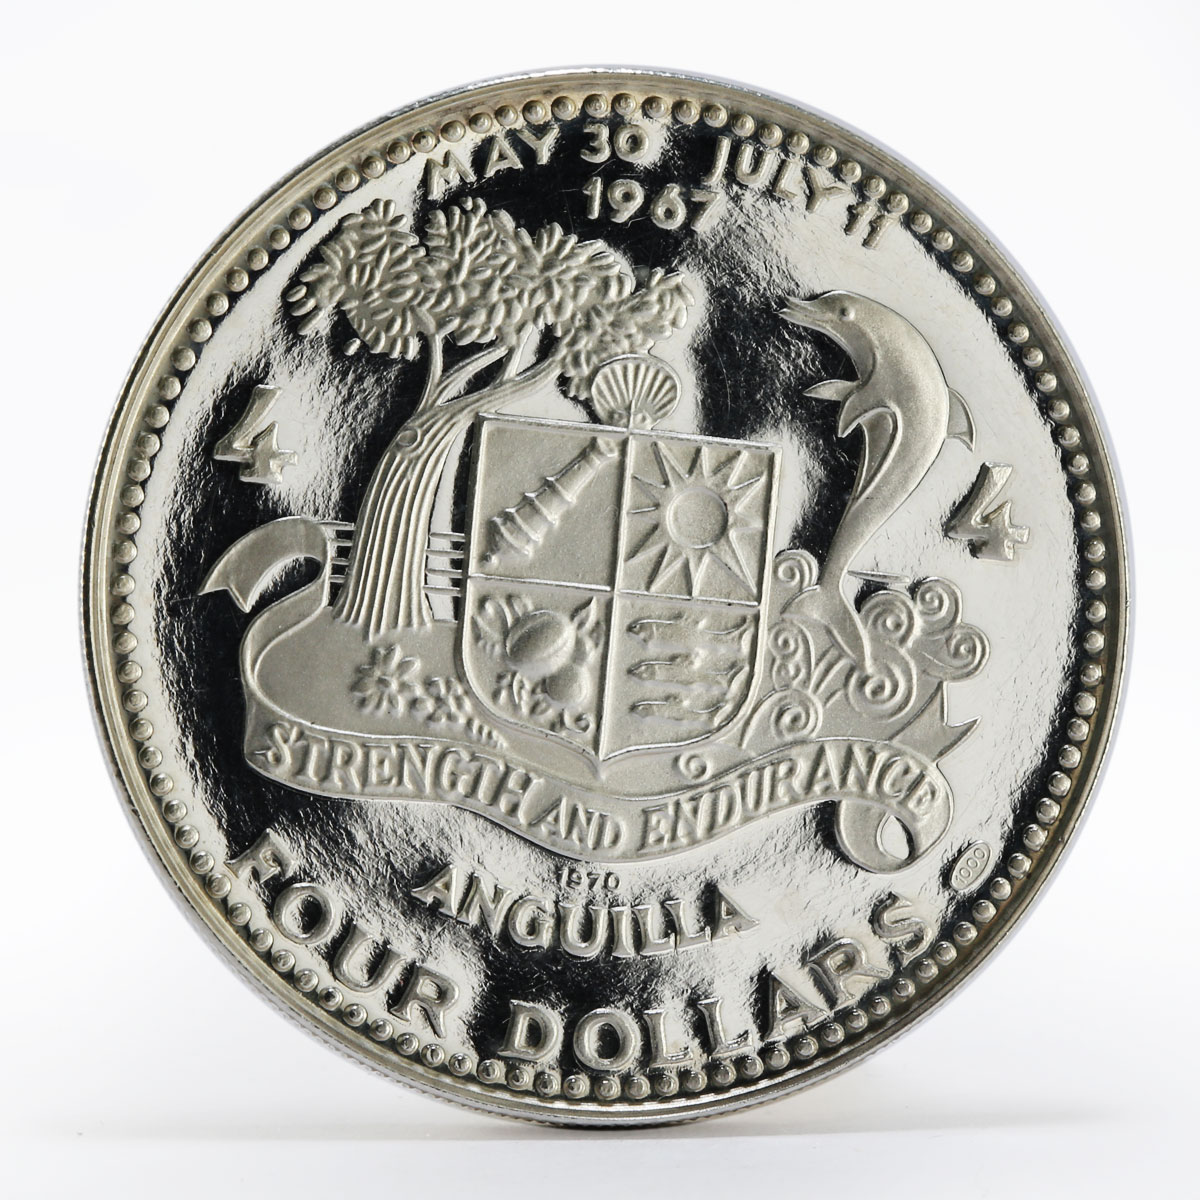 Anguilla 4 dollars Ship Atlantic Star proof silver coin 1970